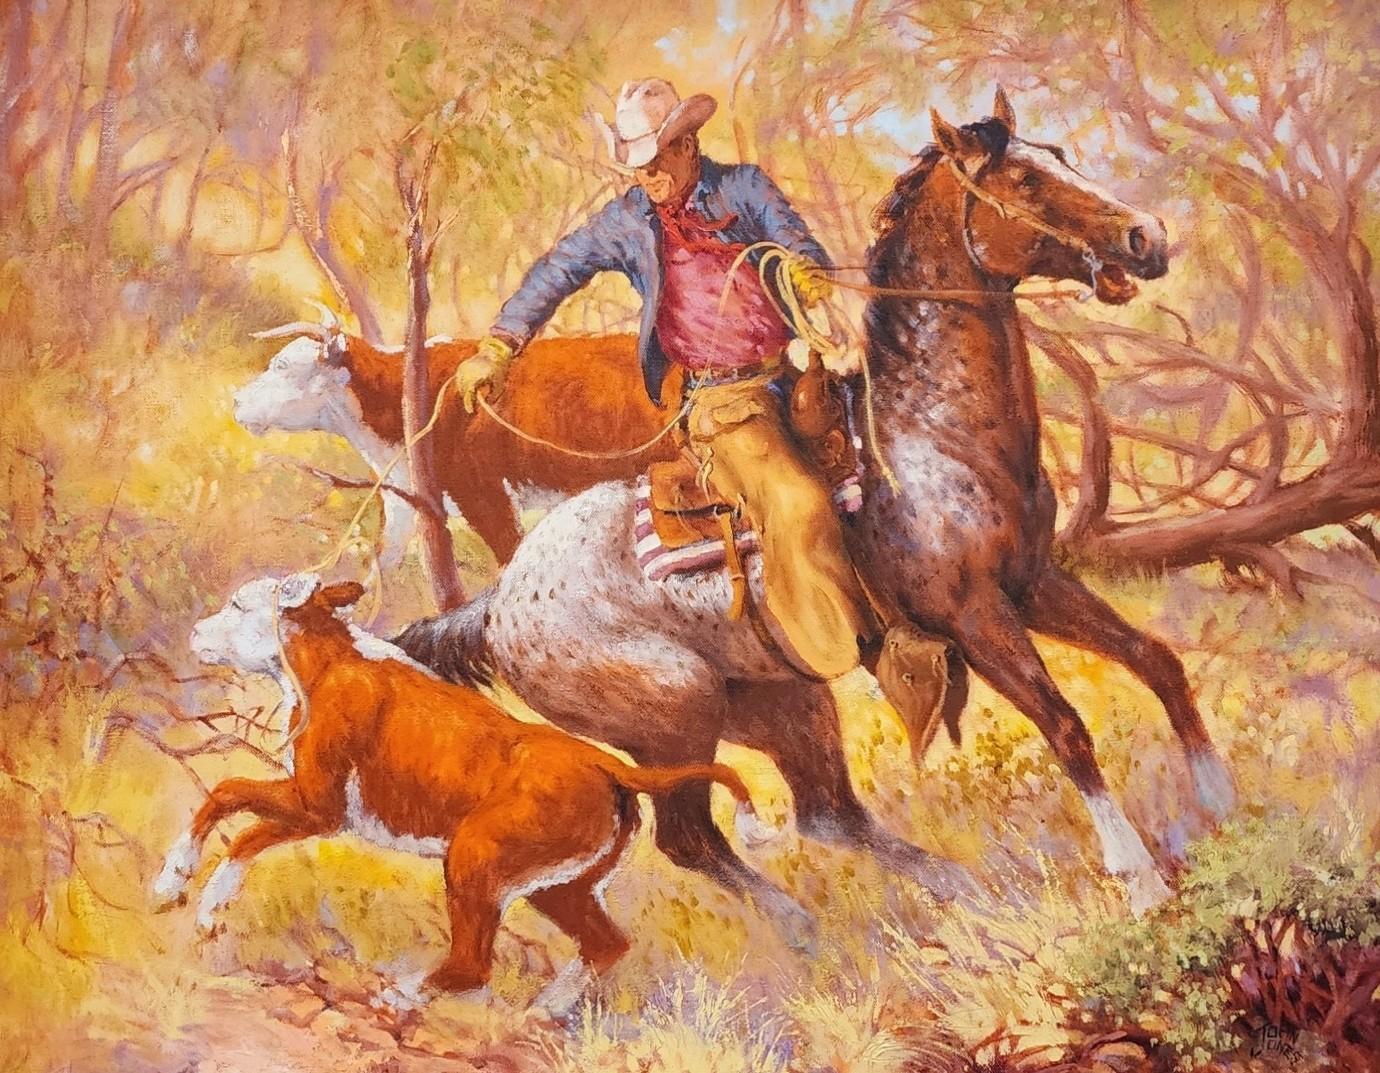 The Capture, Cowboy, Herding Cattle, Vintage Western Art, Pferd, Lassoing Cows – Painting von John Jones